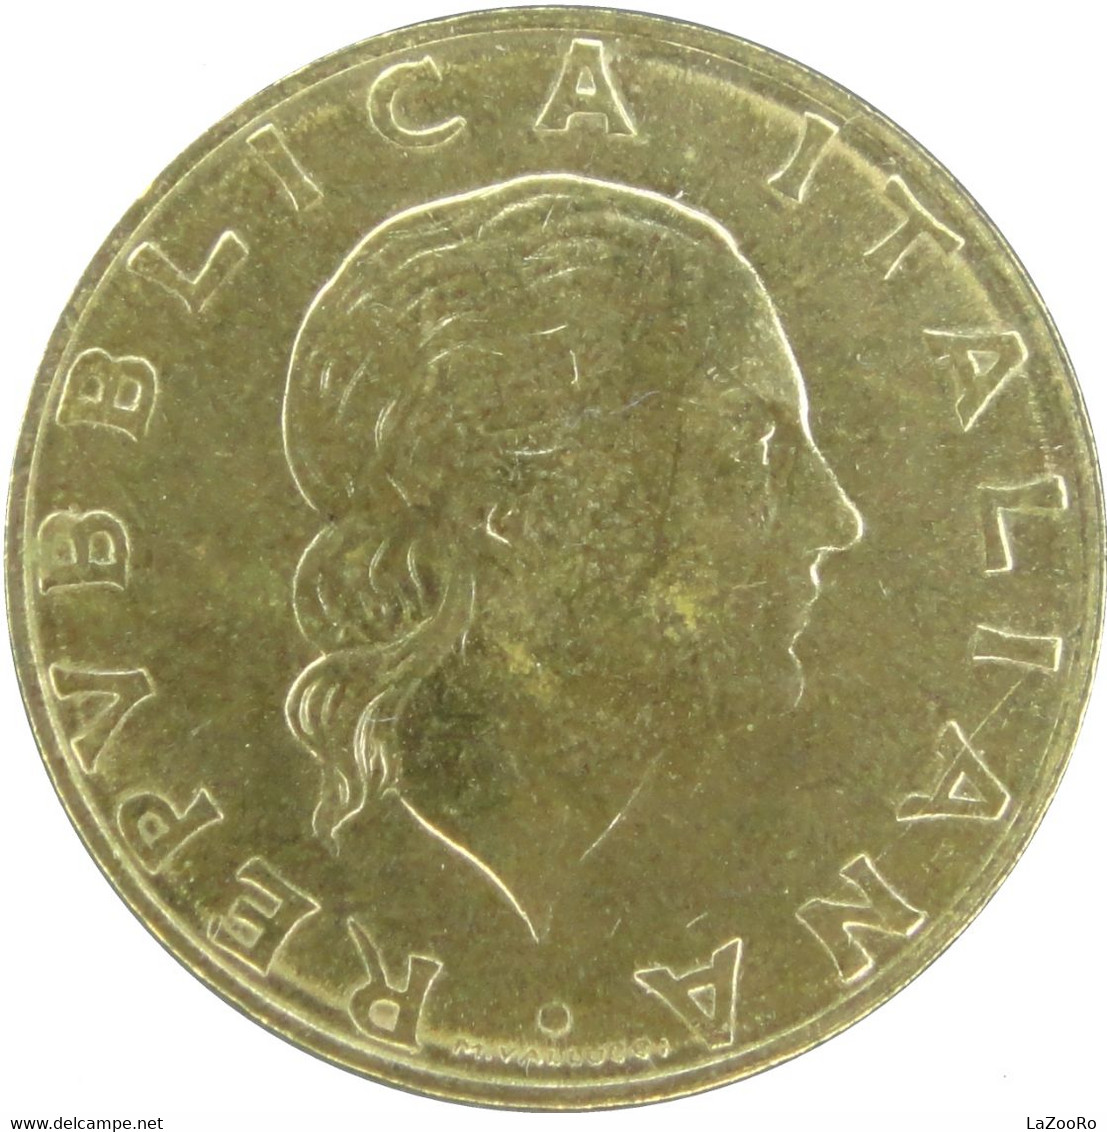 LaZooRo: Italy 200 Lire 1994 XF / UNC Carabinieri - Gedenkmünzen